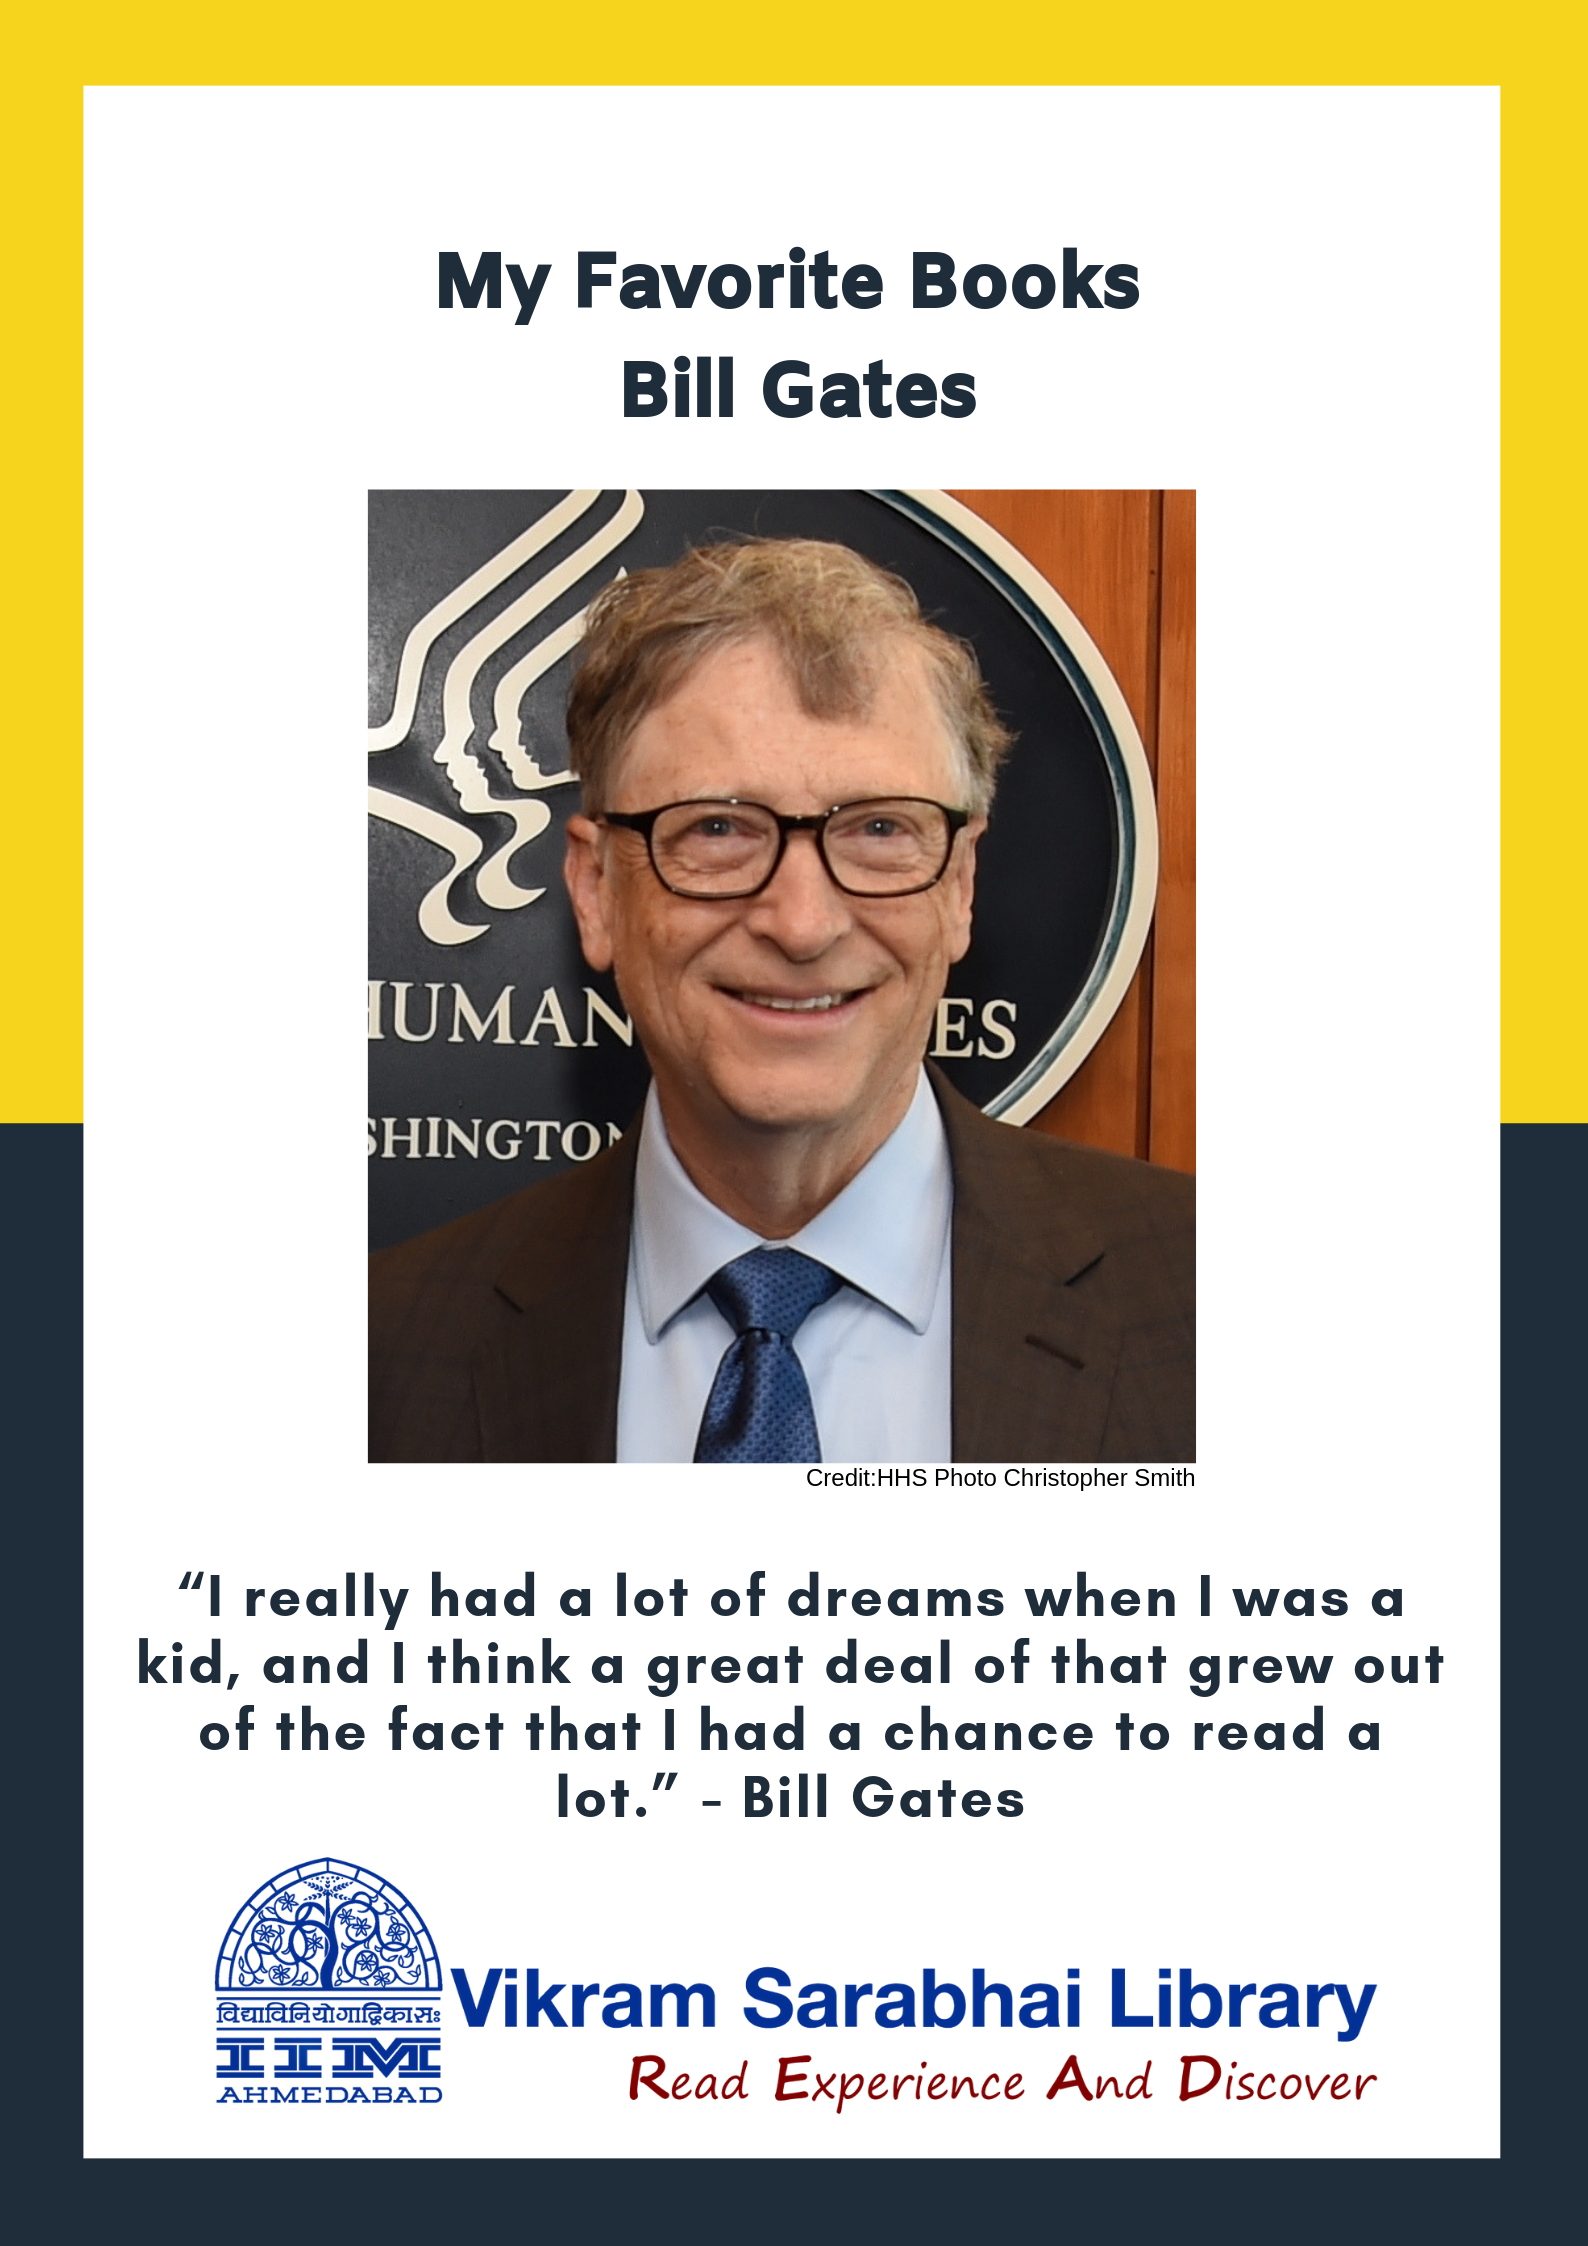 My favorite books Bill Gates